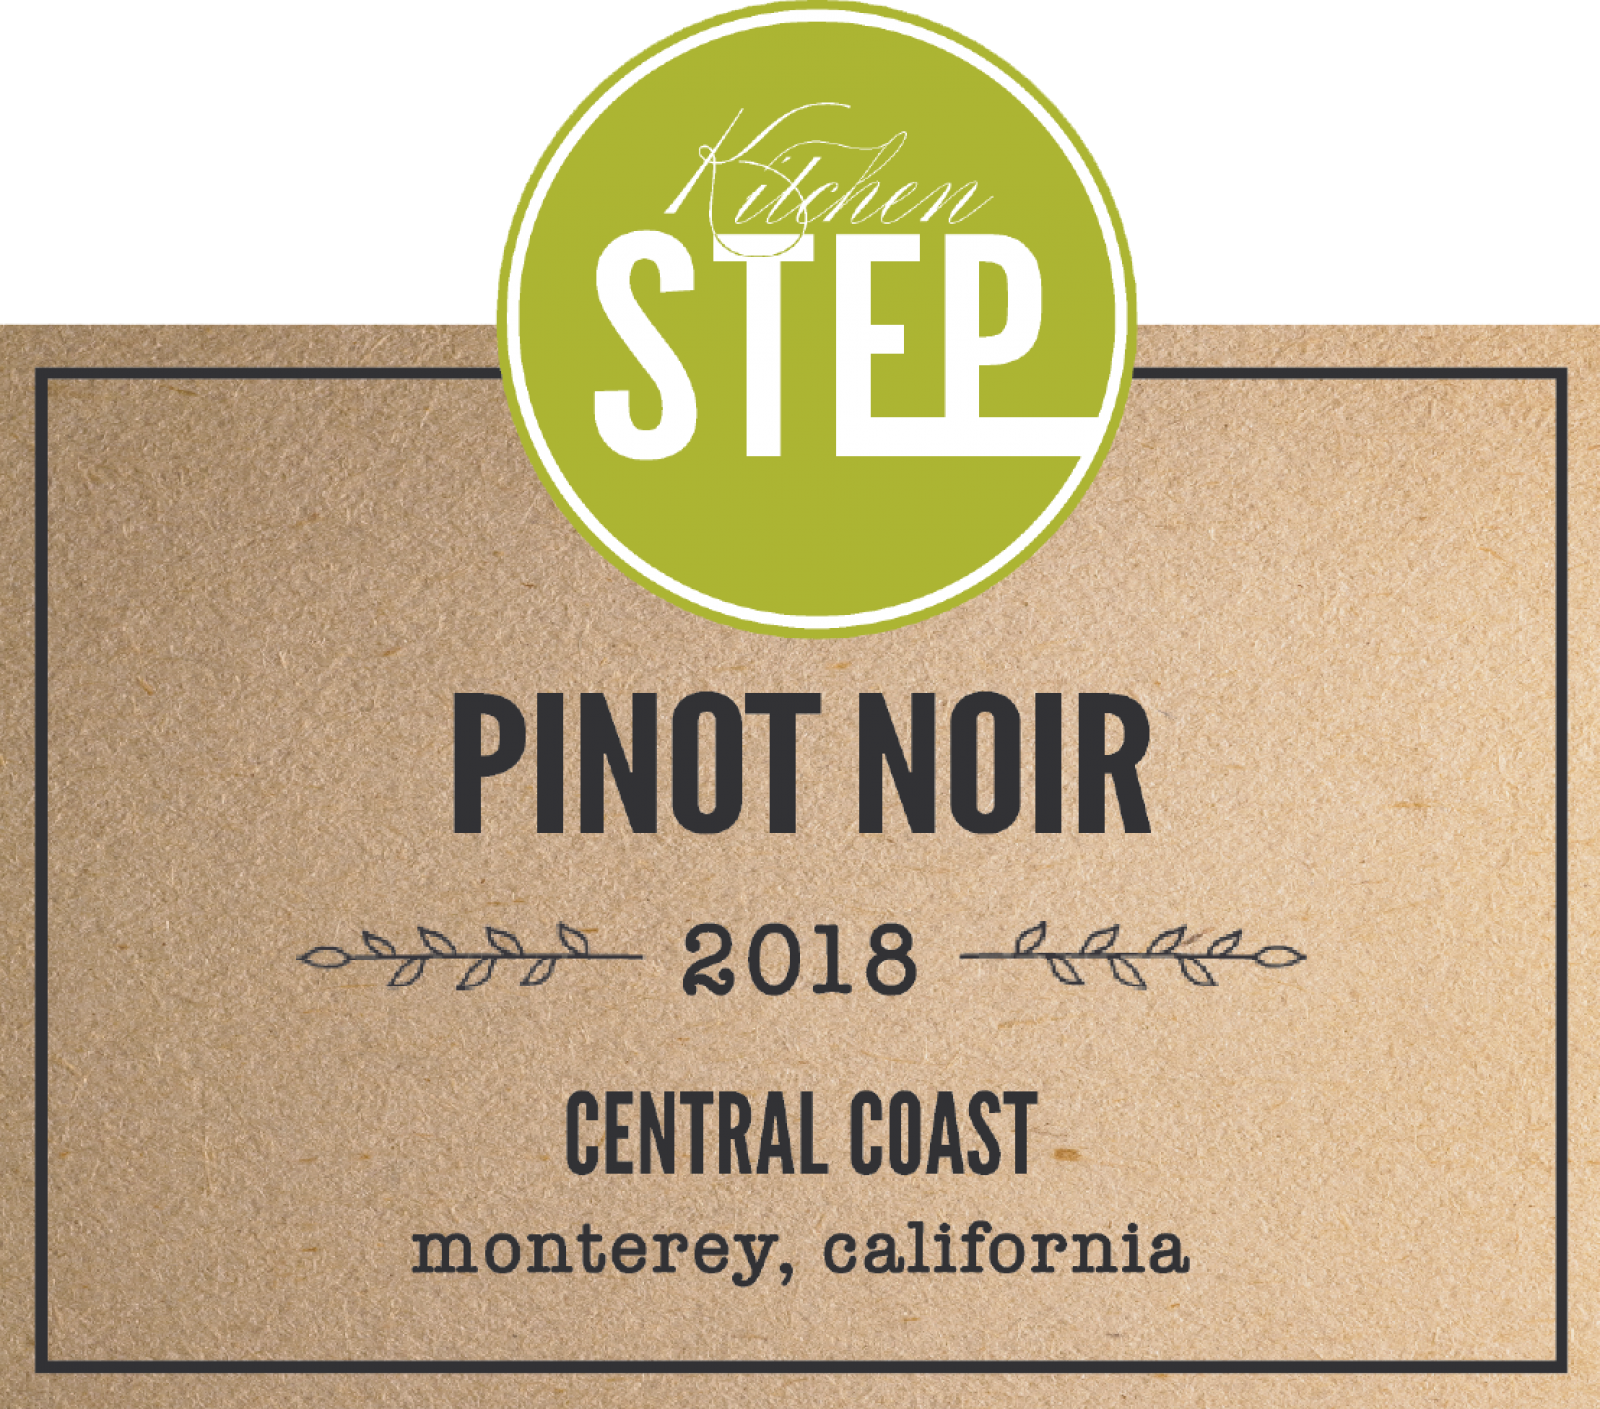 Kitchen Step Pinot Noir 2018